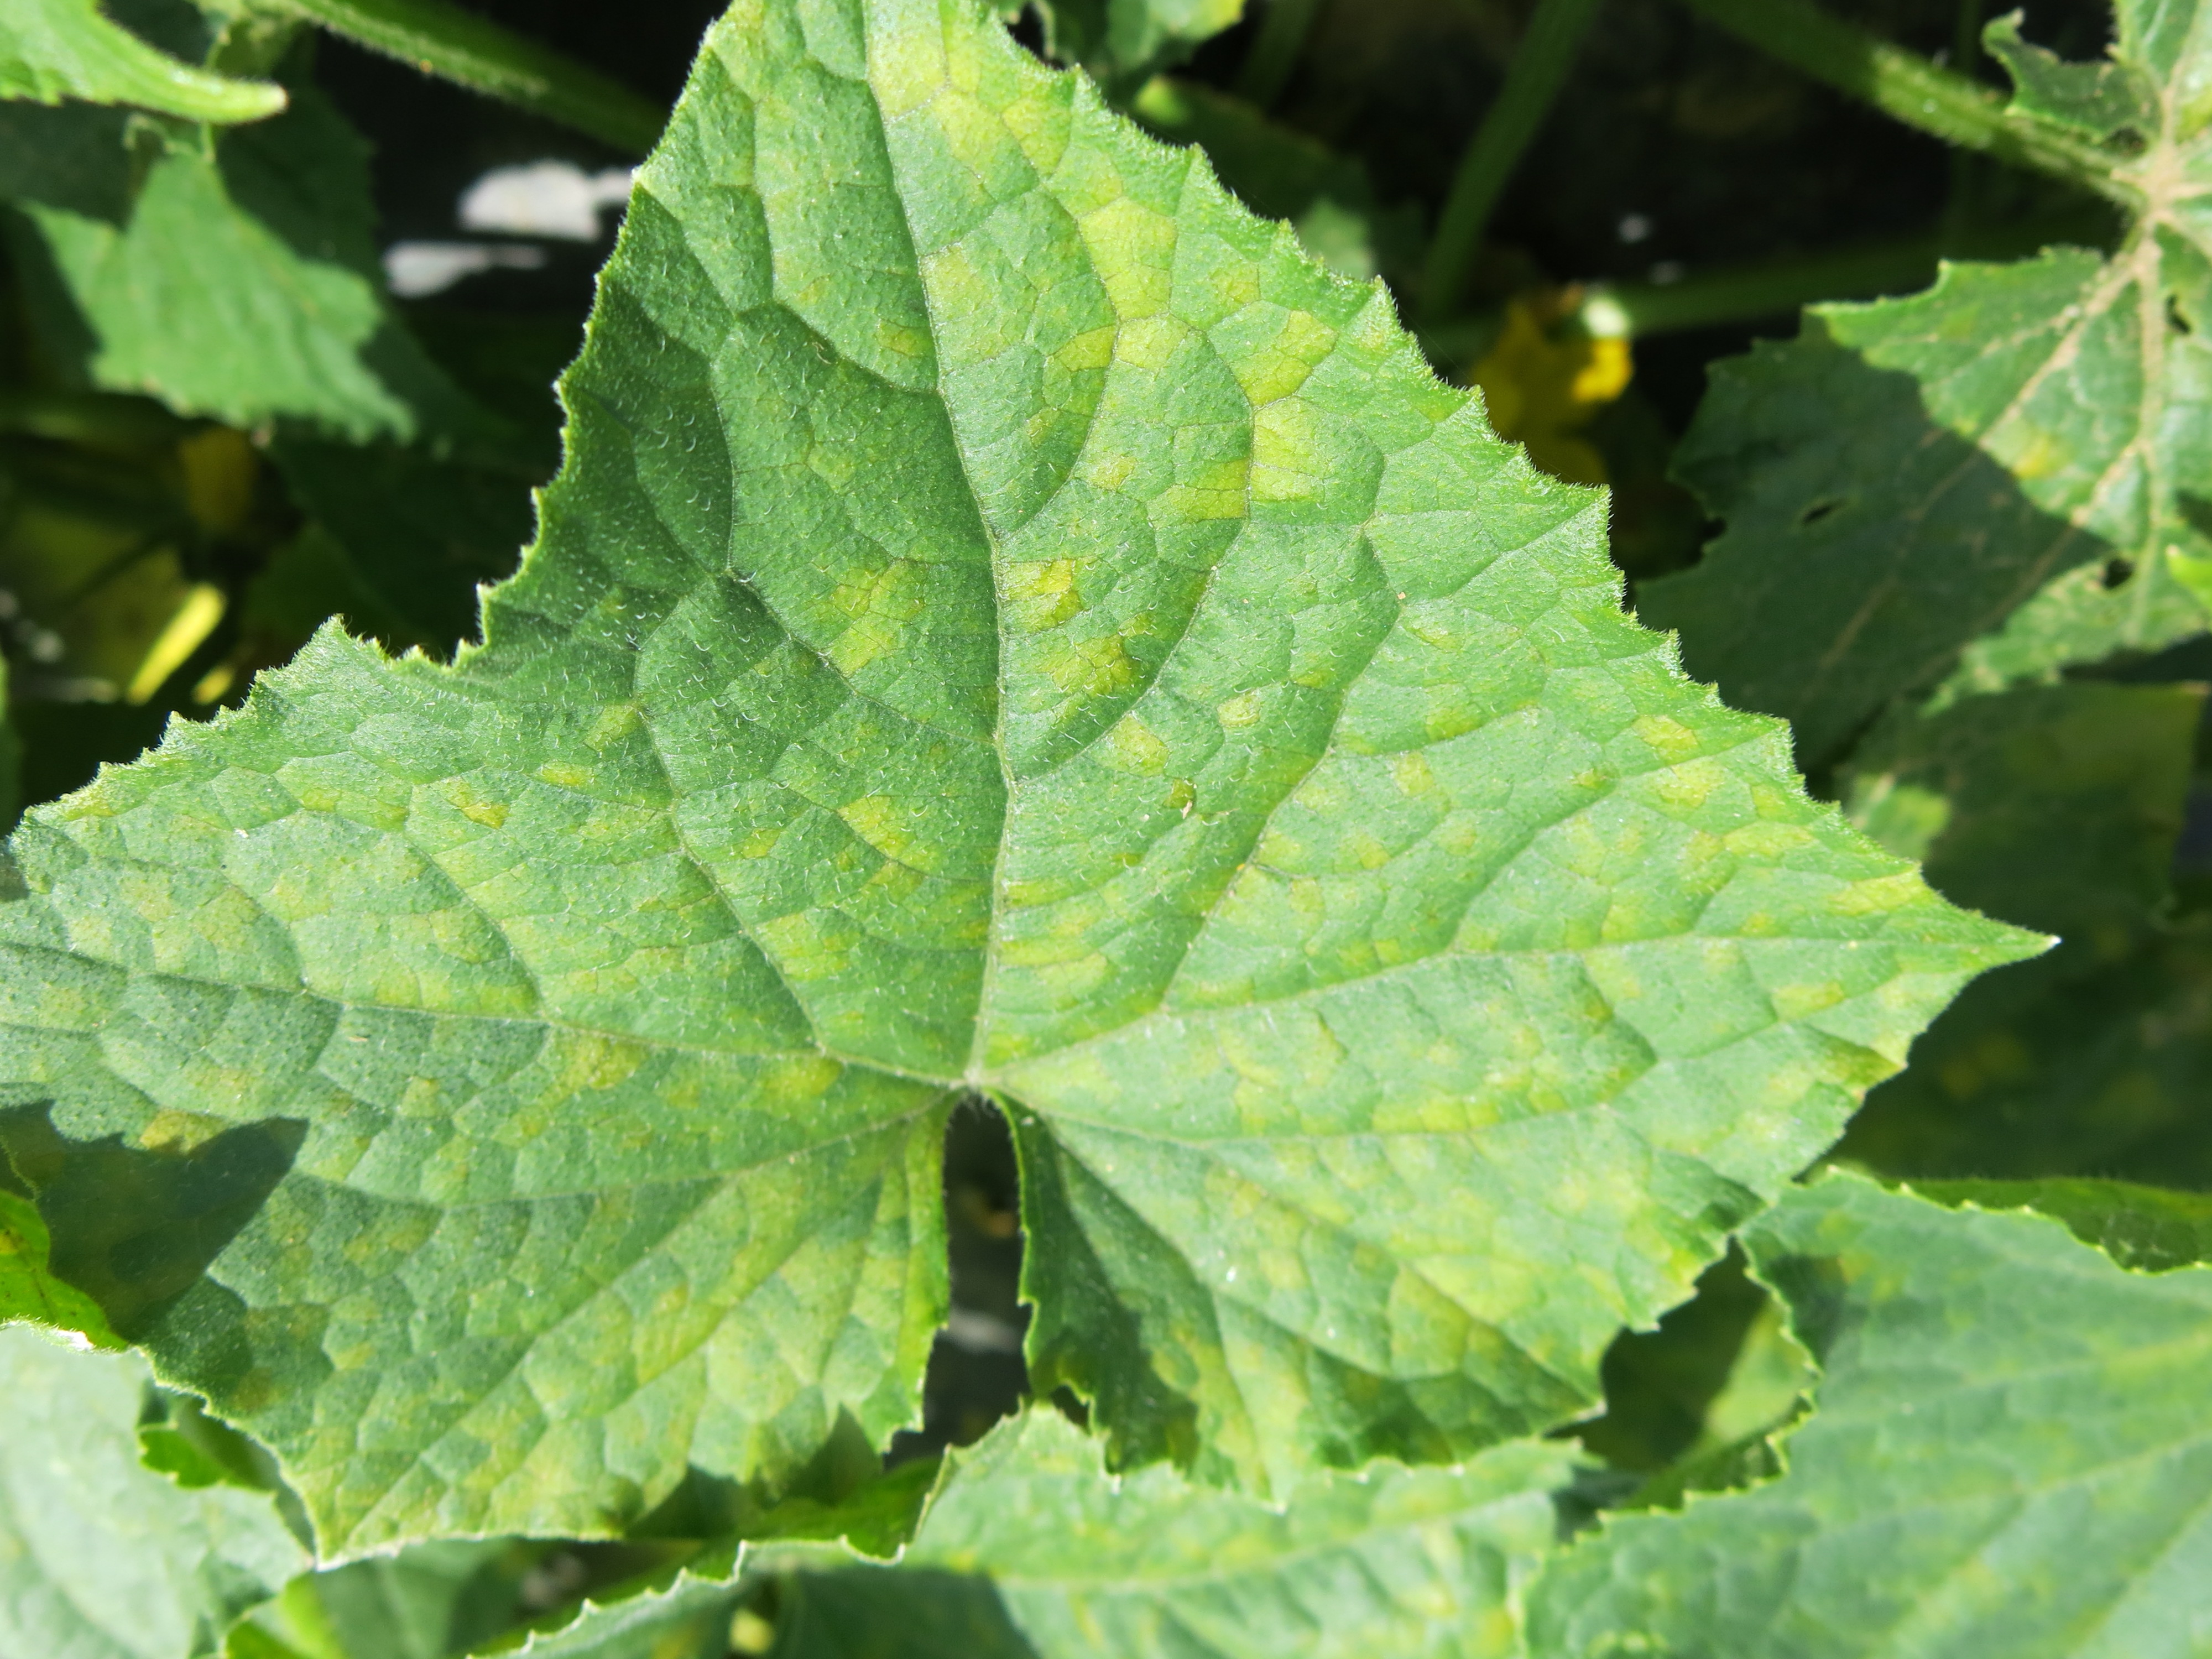 symptoms on top of leaf